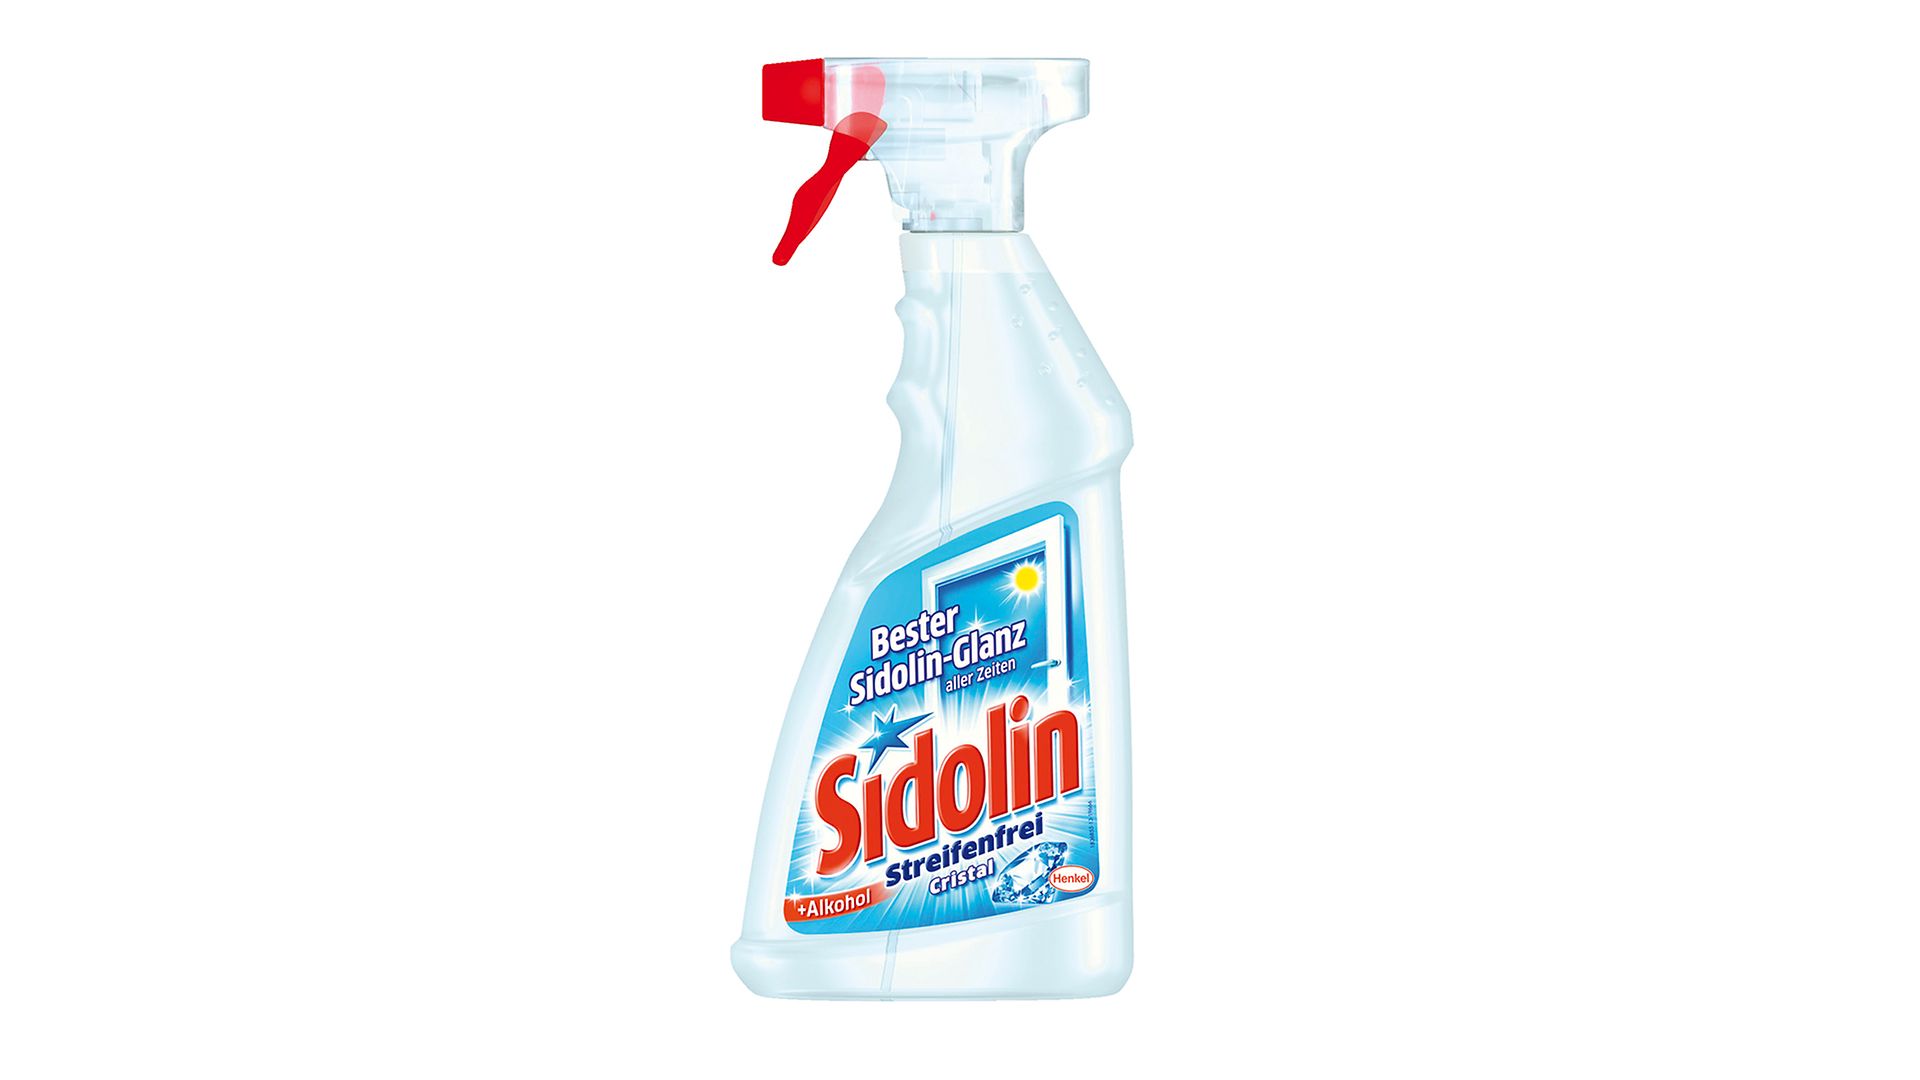 The brand “Sidolin